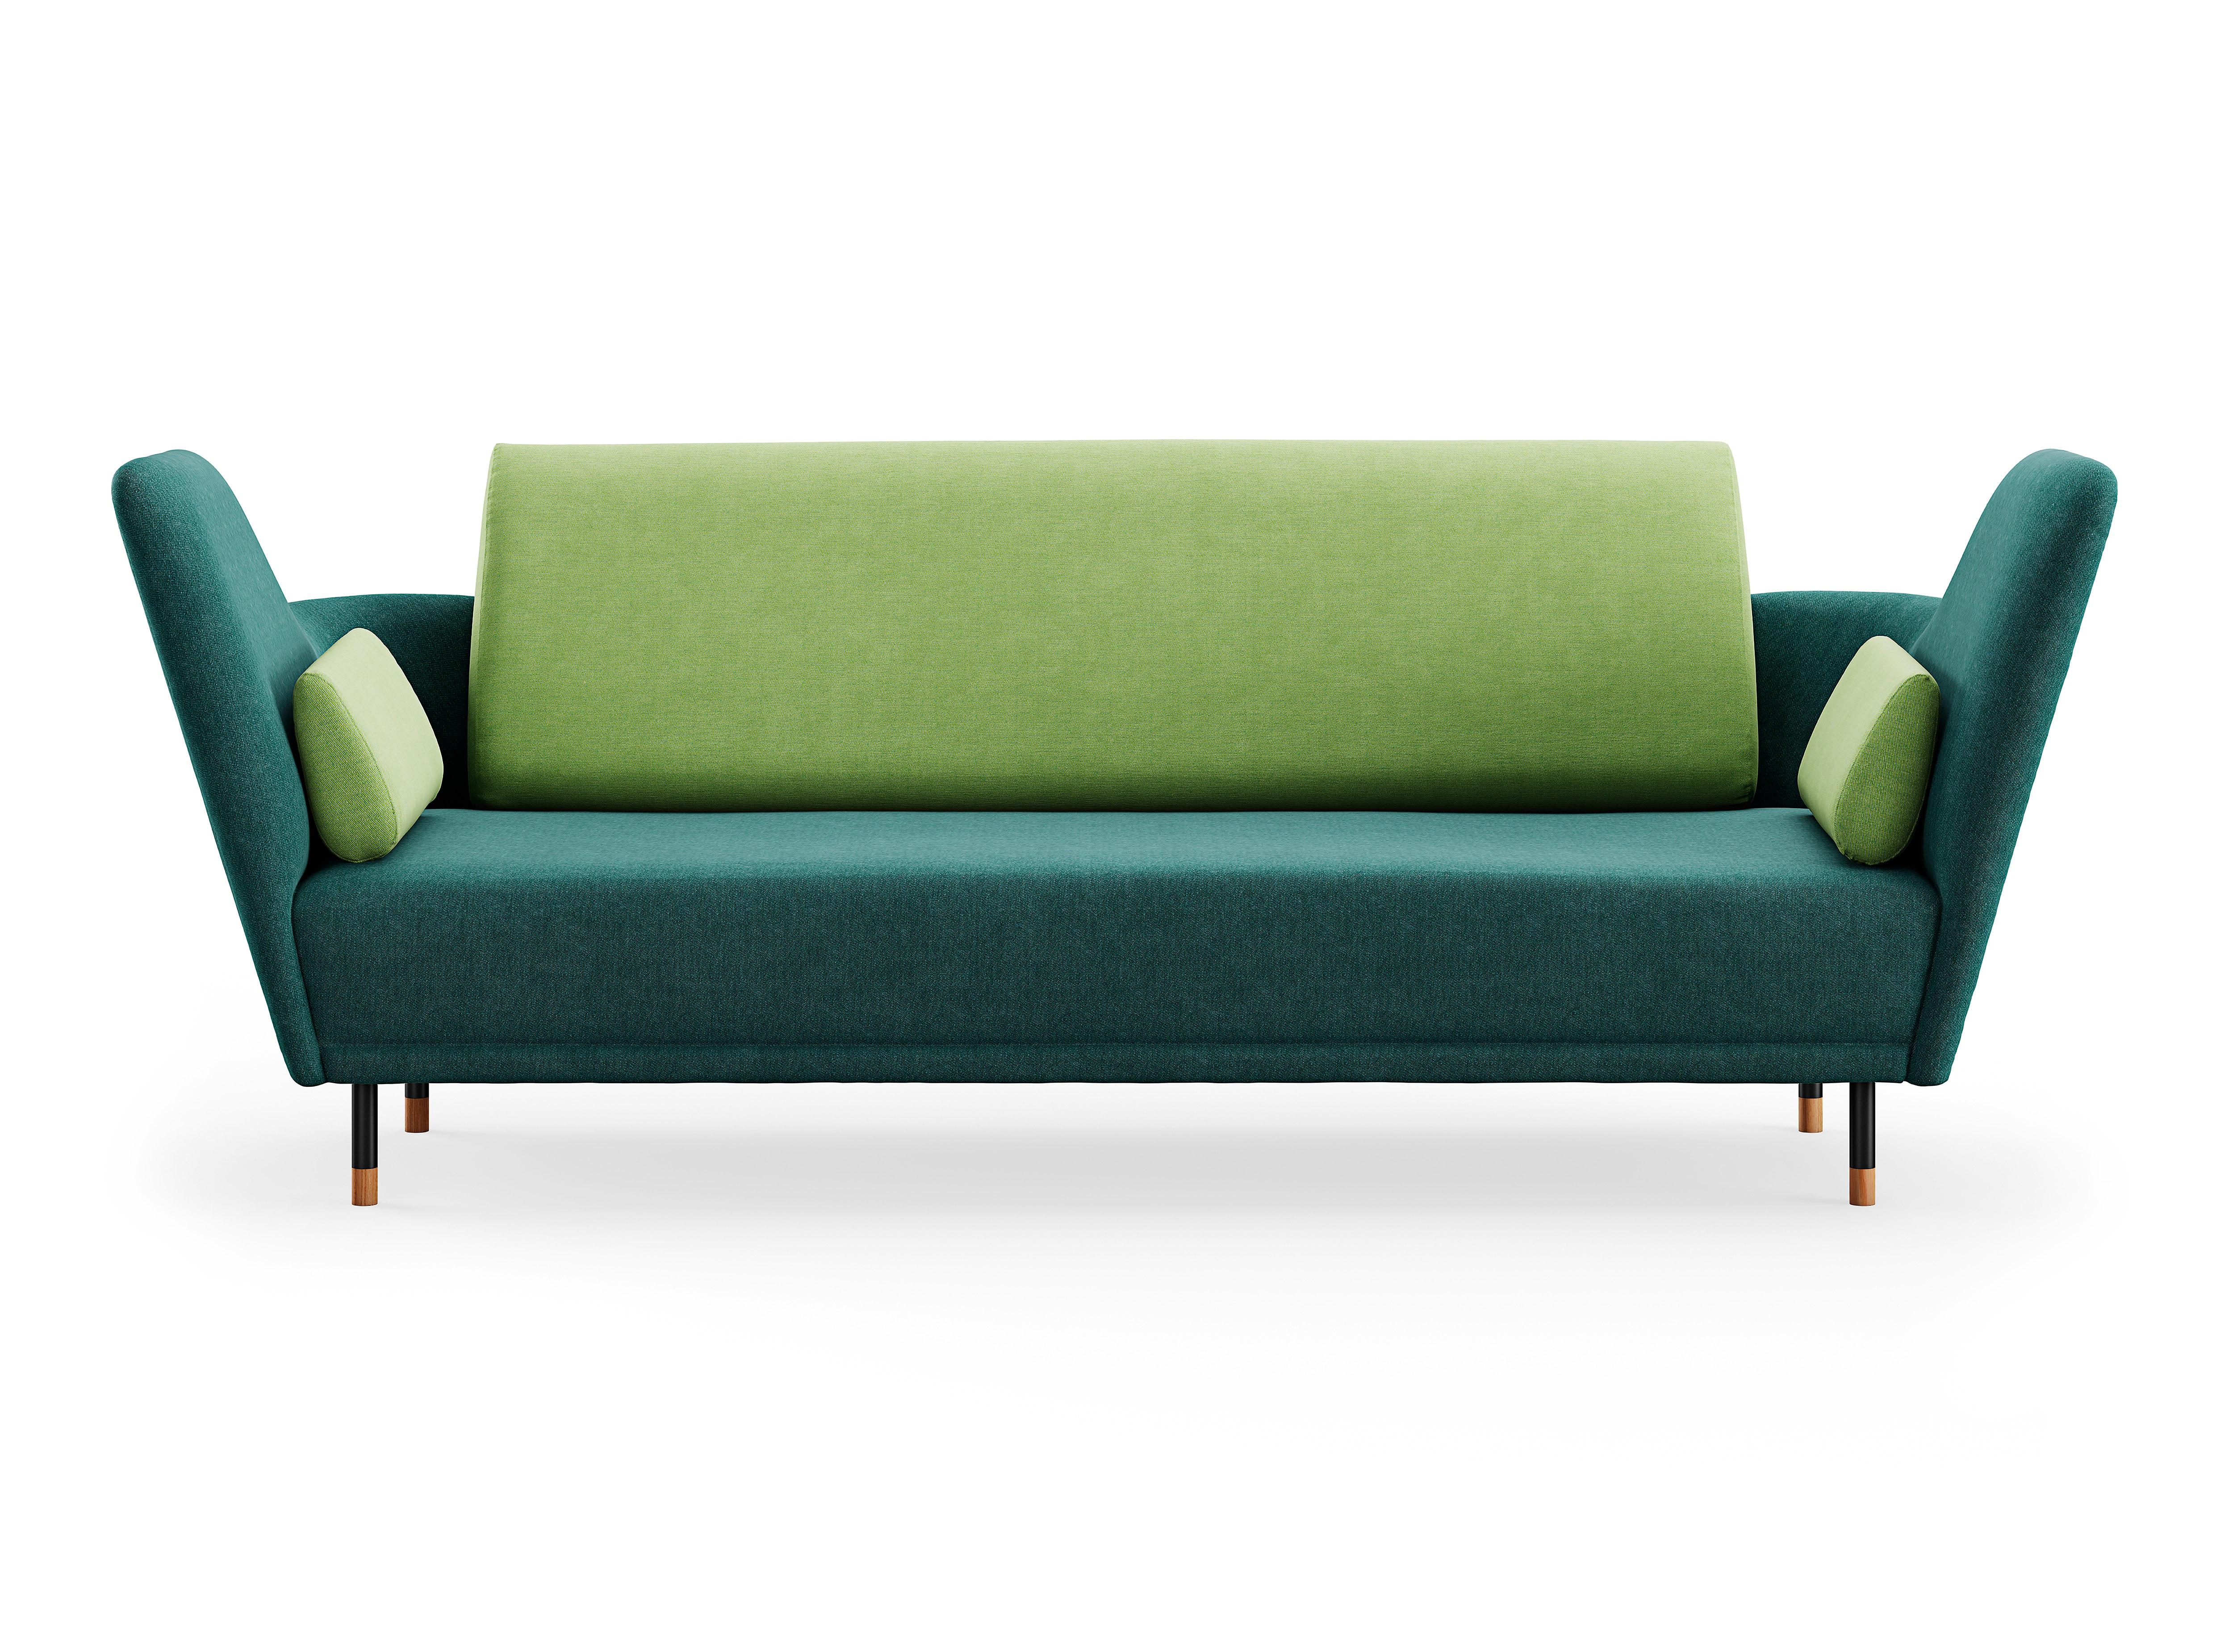 Upholstery Finn Juhl 57 Sofa by House of Finn Juhl